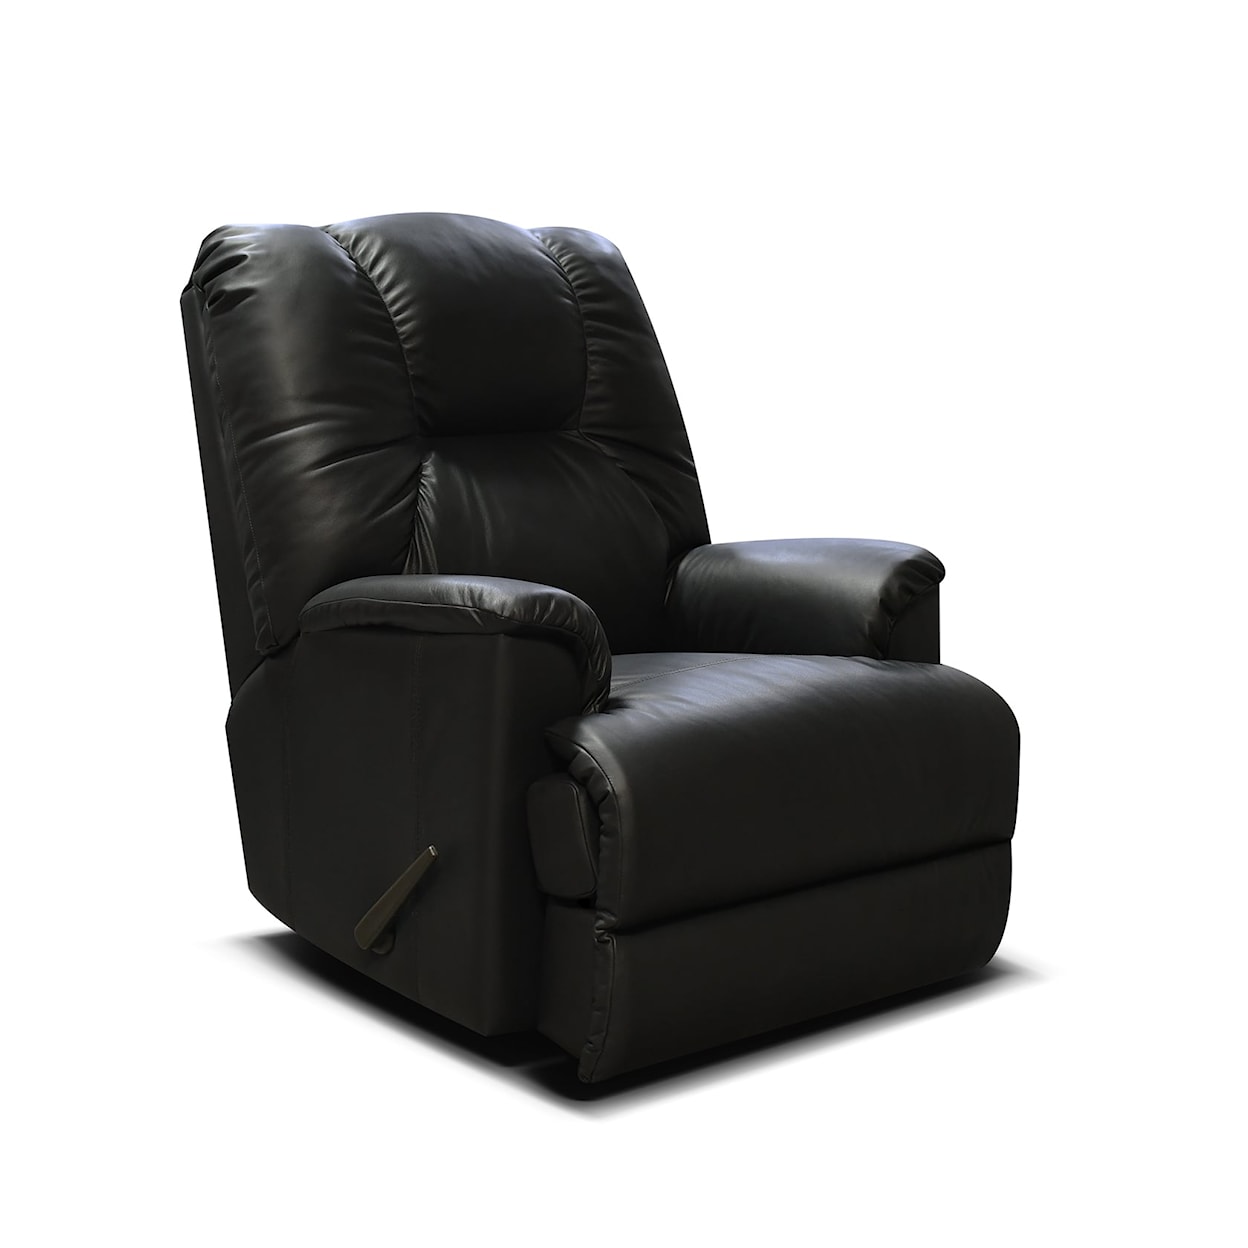 Tennessee Custom Upholstery EZ5W00 Series Leather Minimum Proximity Recliner